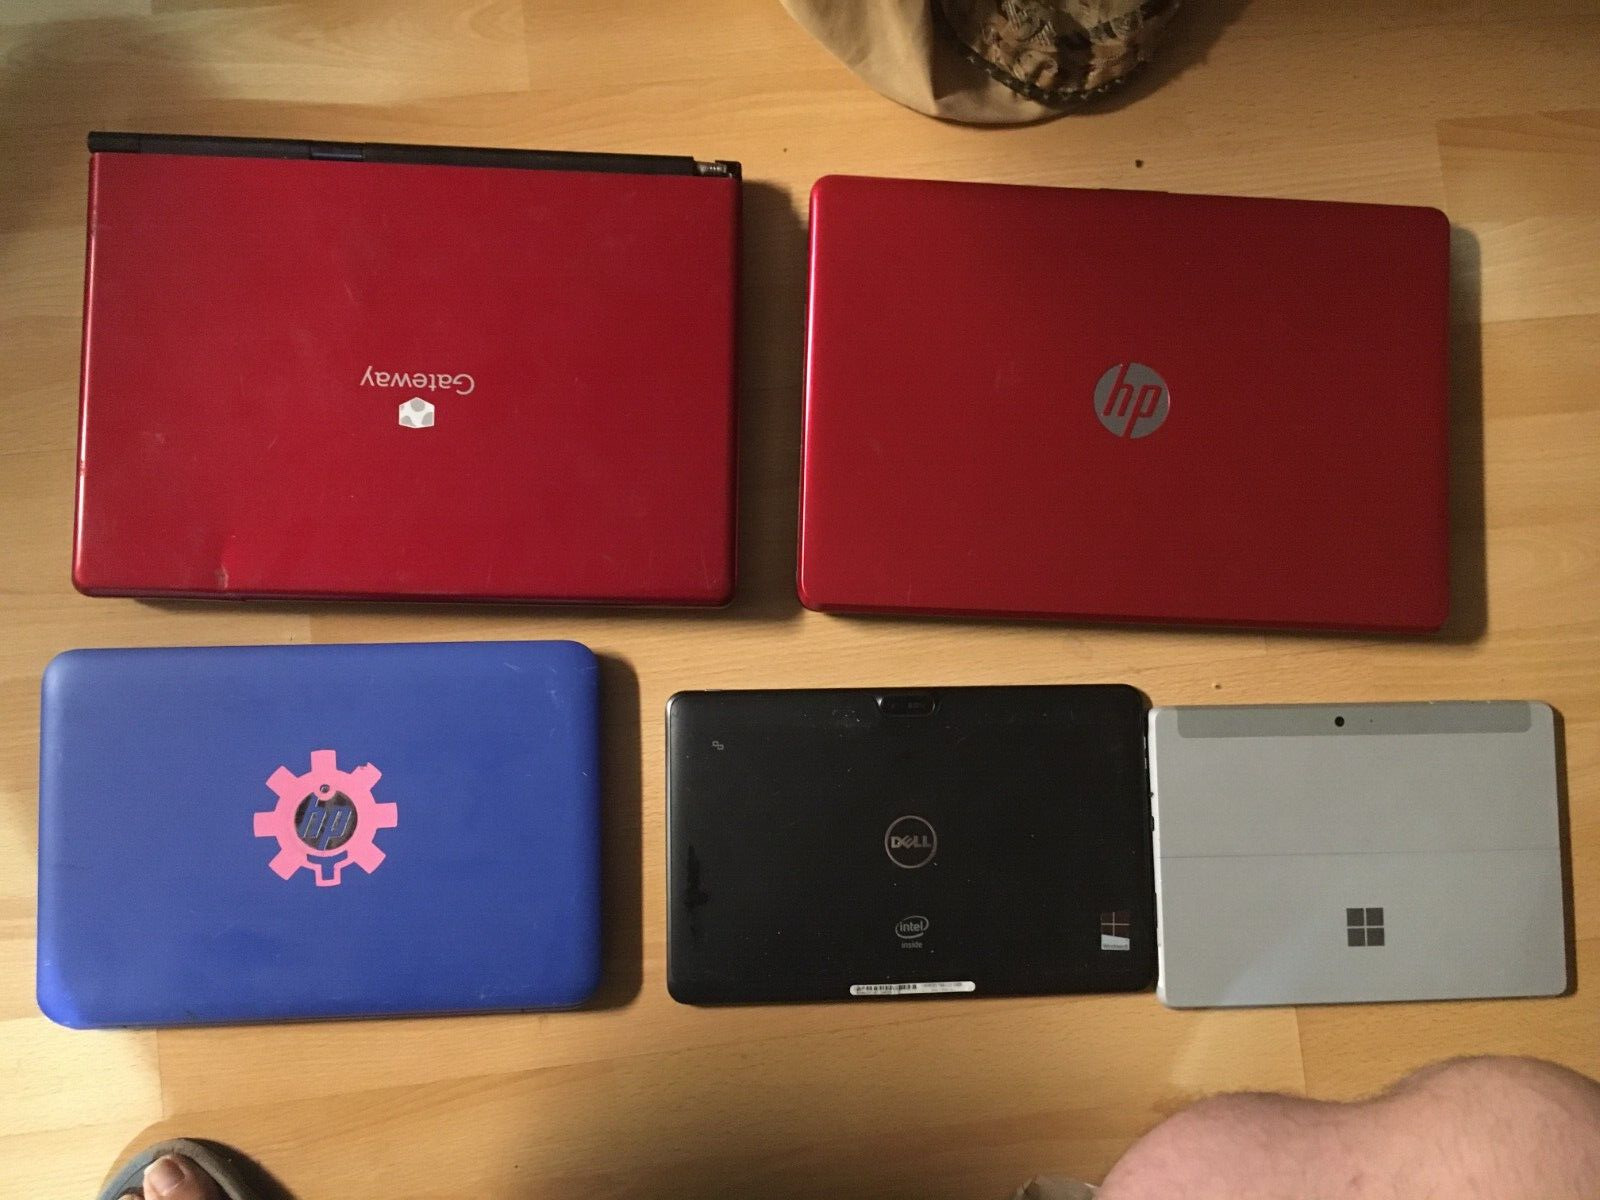 Lot/bundle FIVE (5) Windows/HP/Gateway/Dell Laptop/Tablets